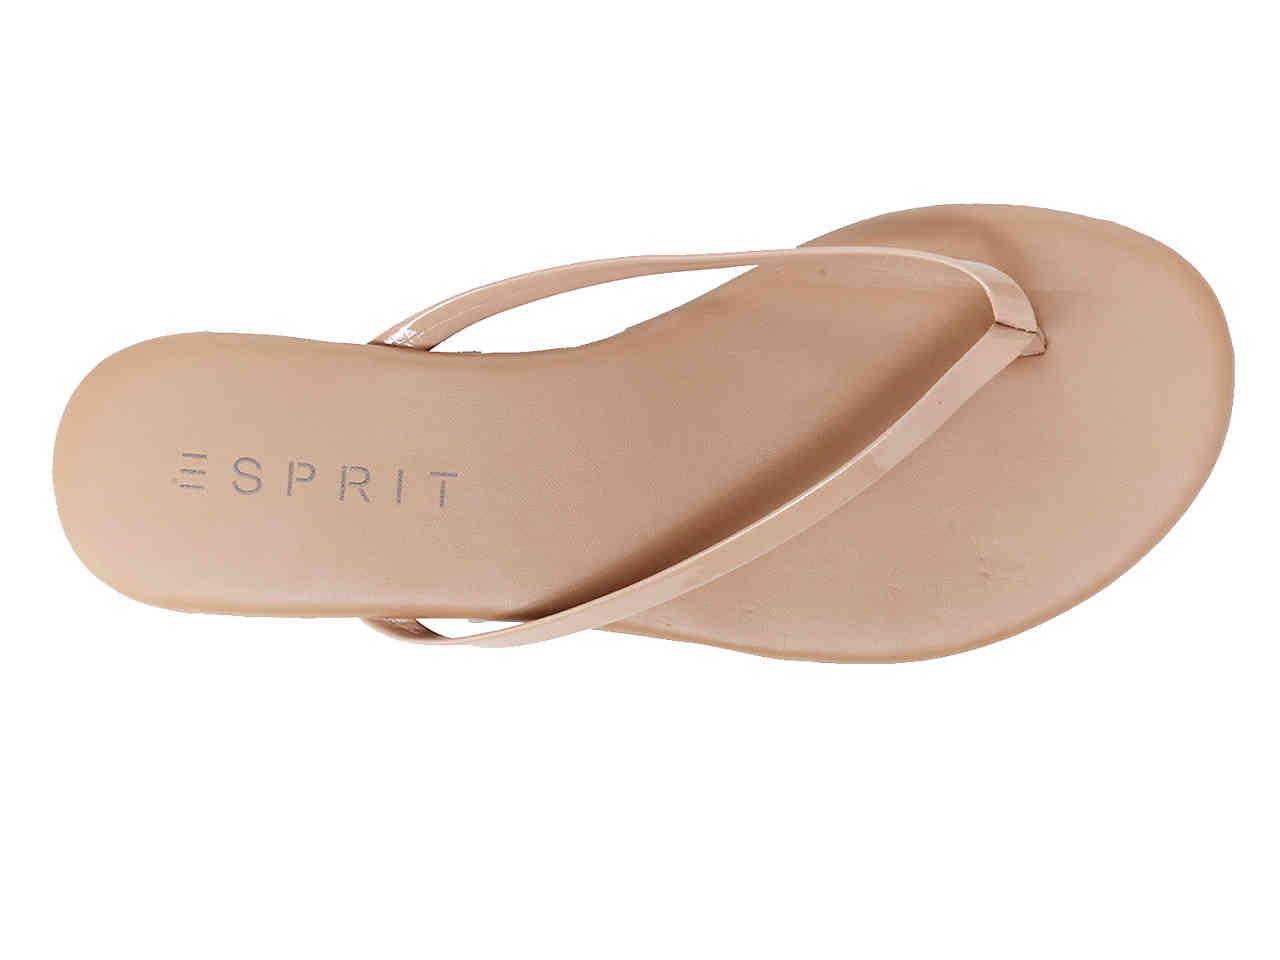 Esprit Party Flip Flop in Natural | Lyst